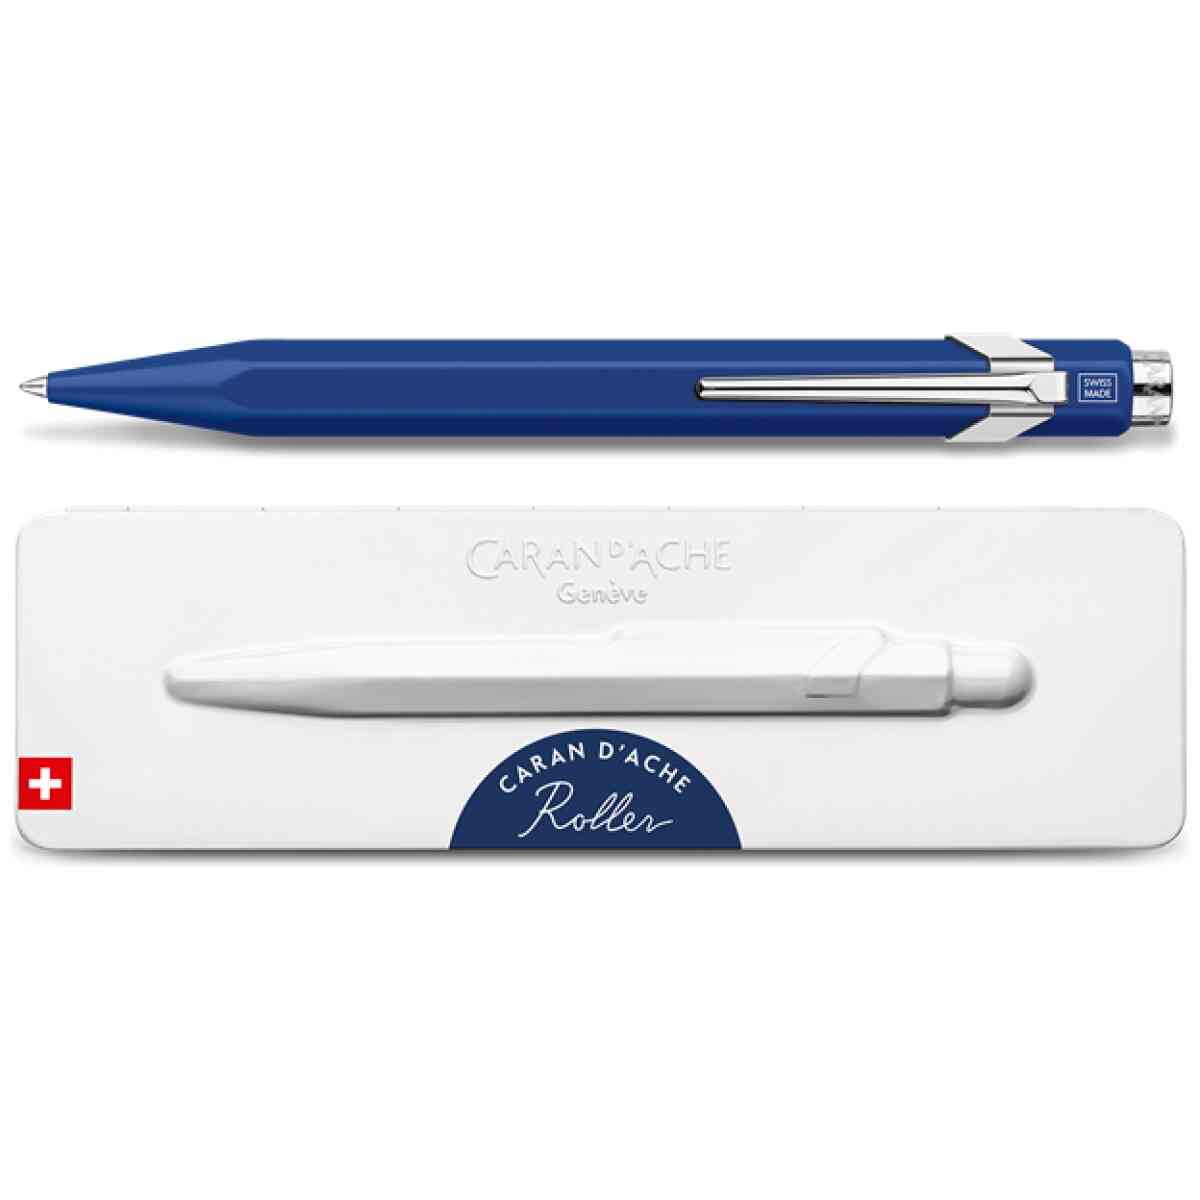 e stylo roller 849 vernis bleu avec etui caran d ache detail0 0